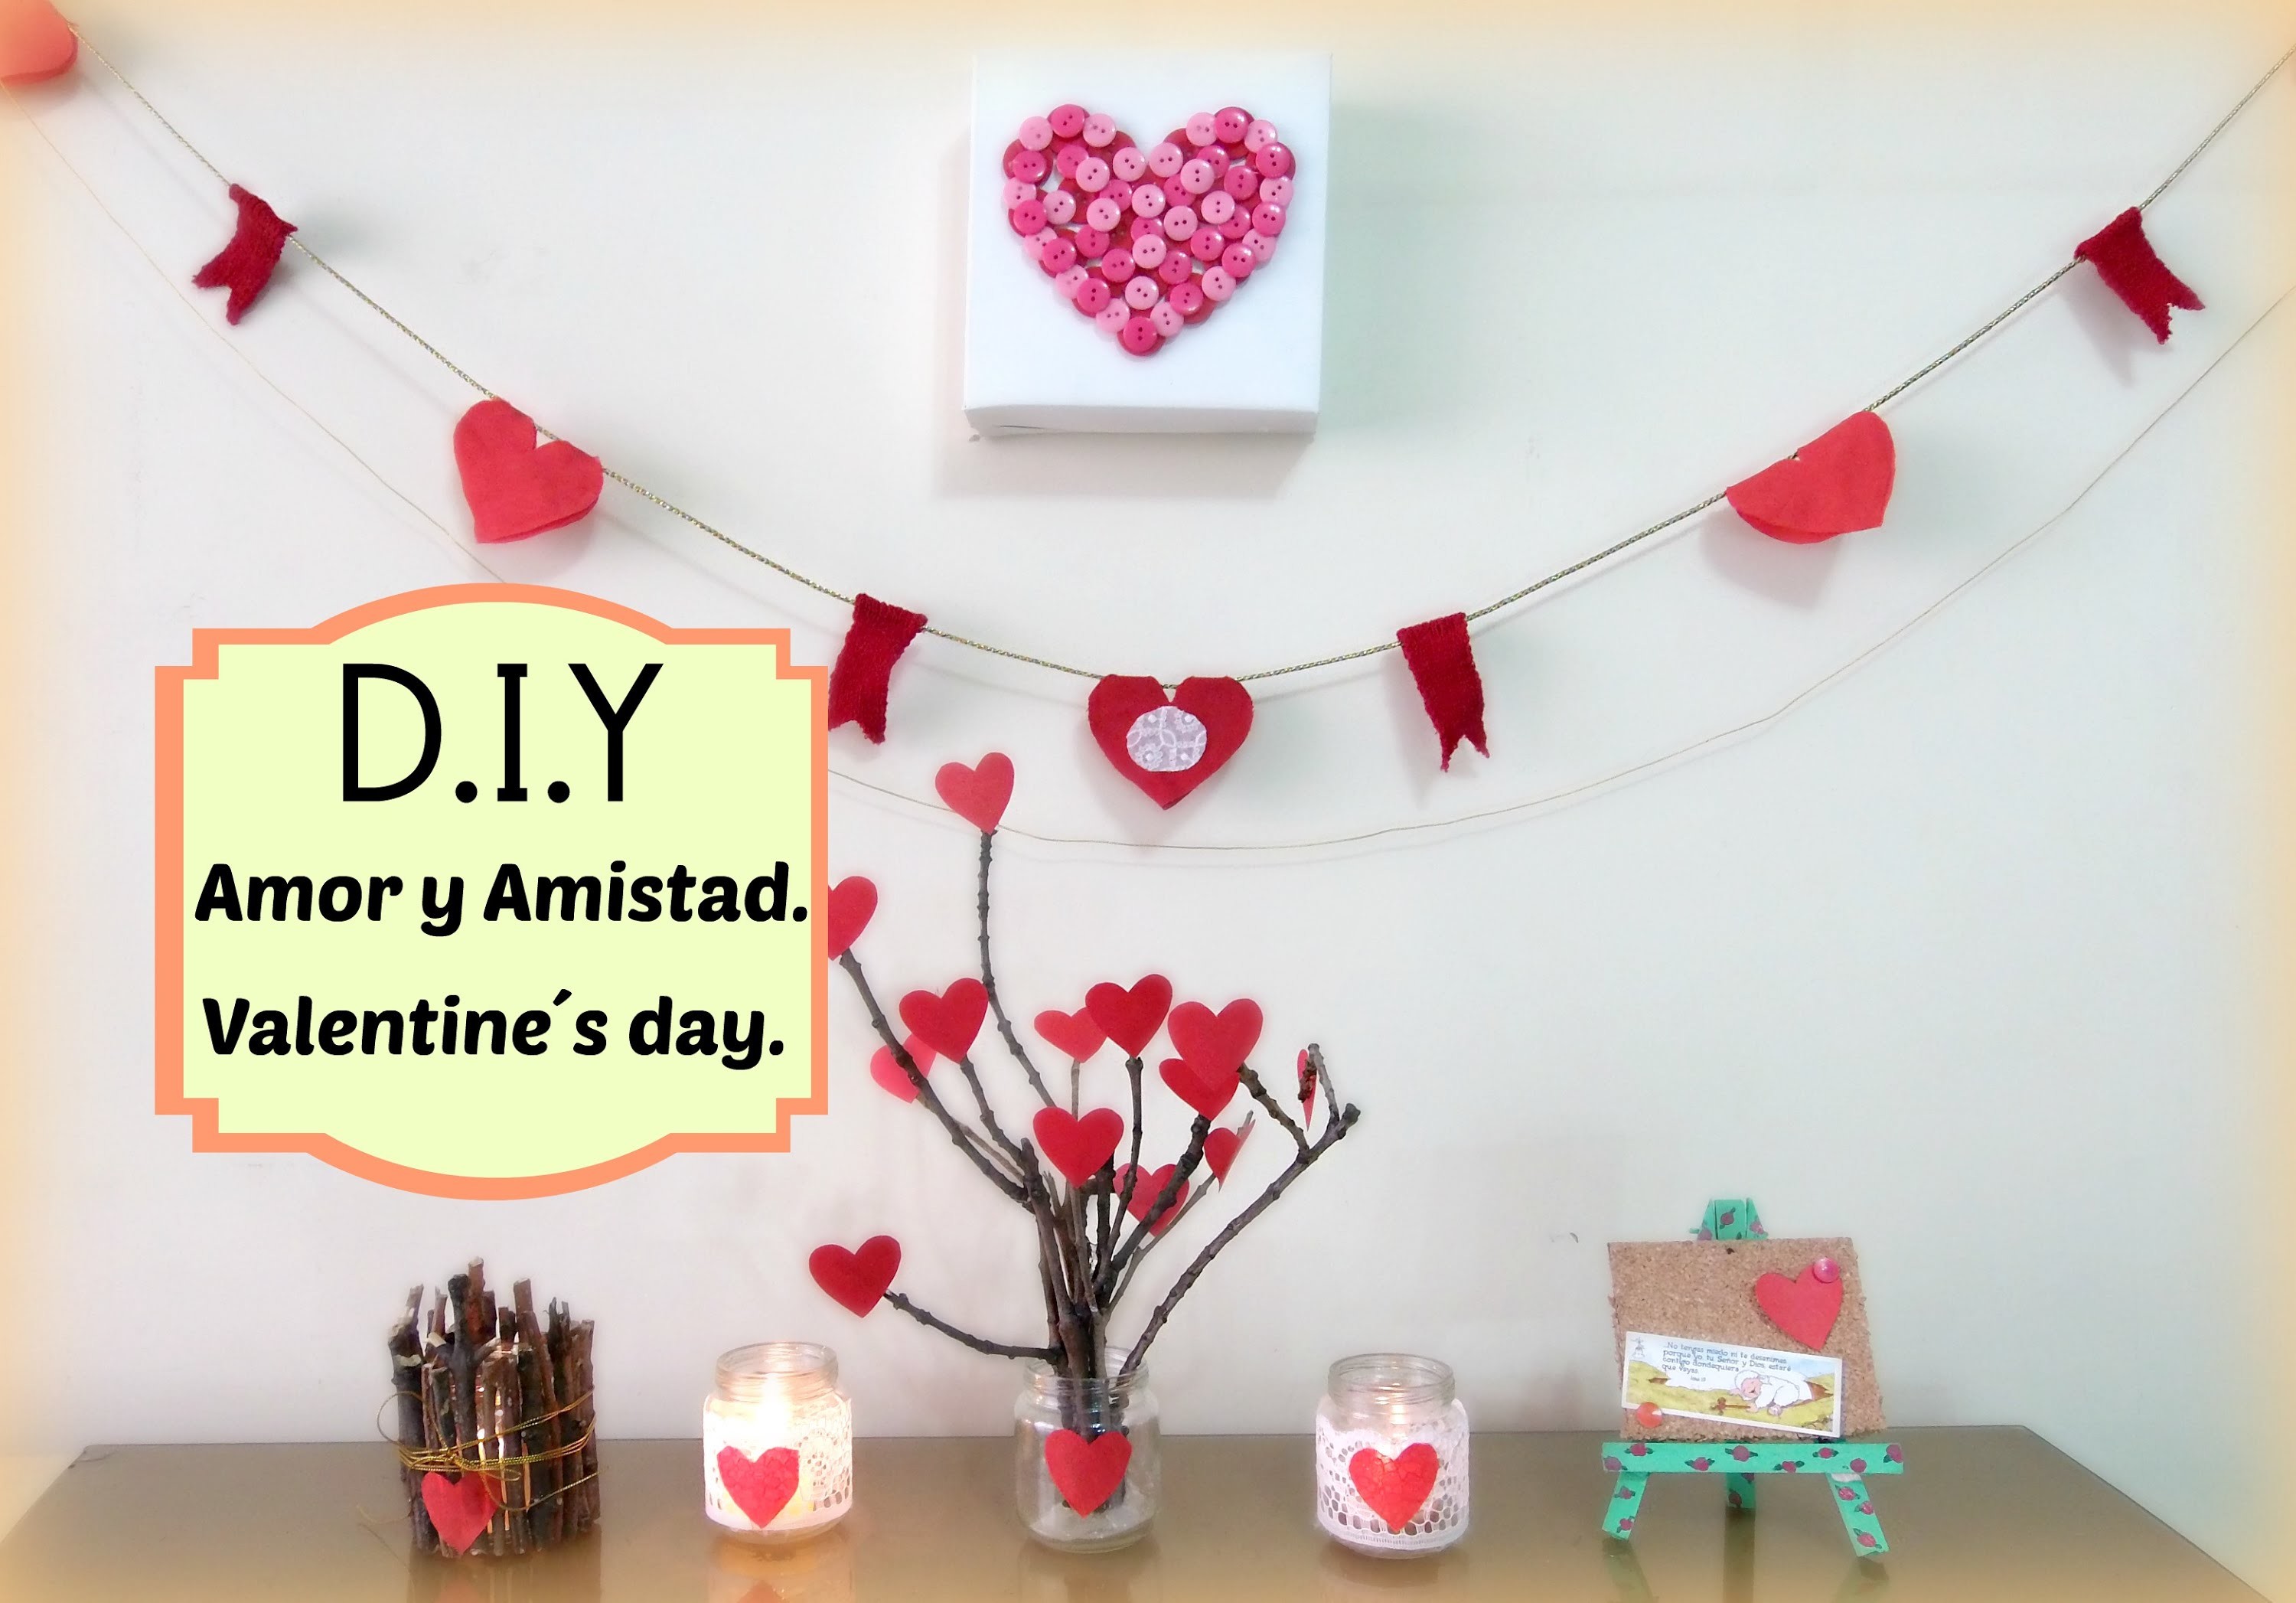 DIY Amor y Amistad, Decora.Decoration for Valentine's Day